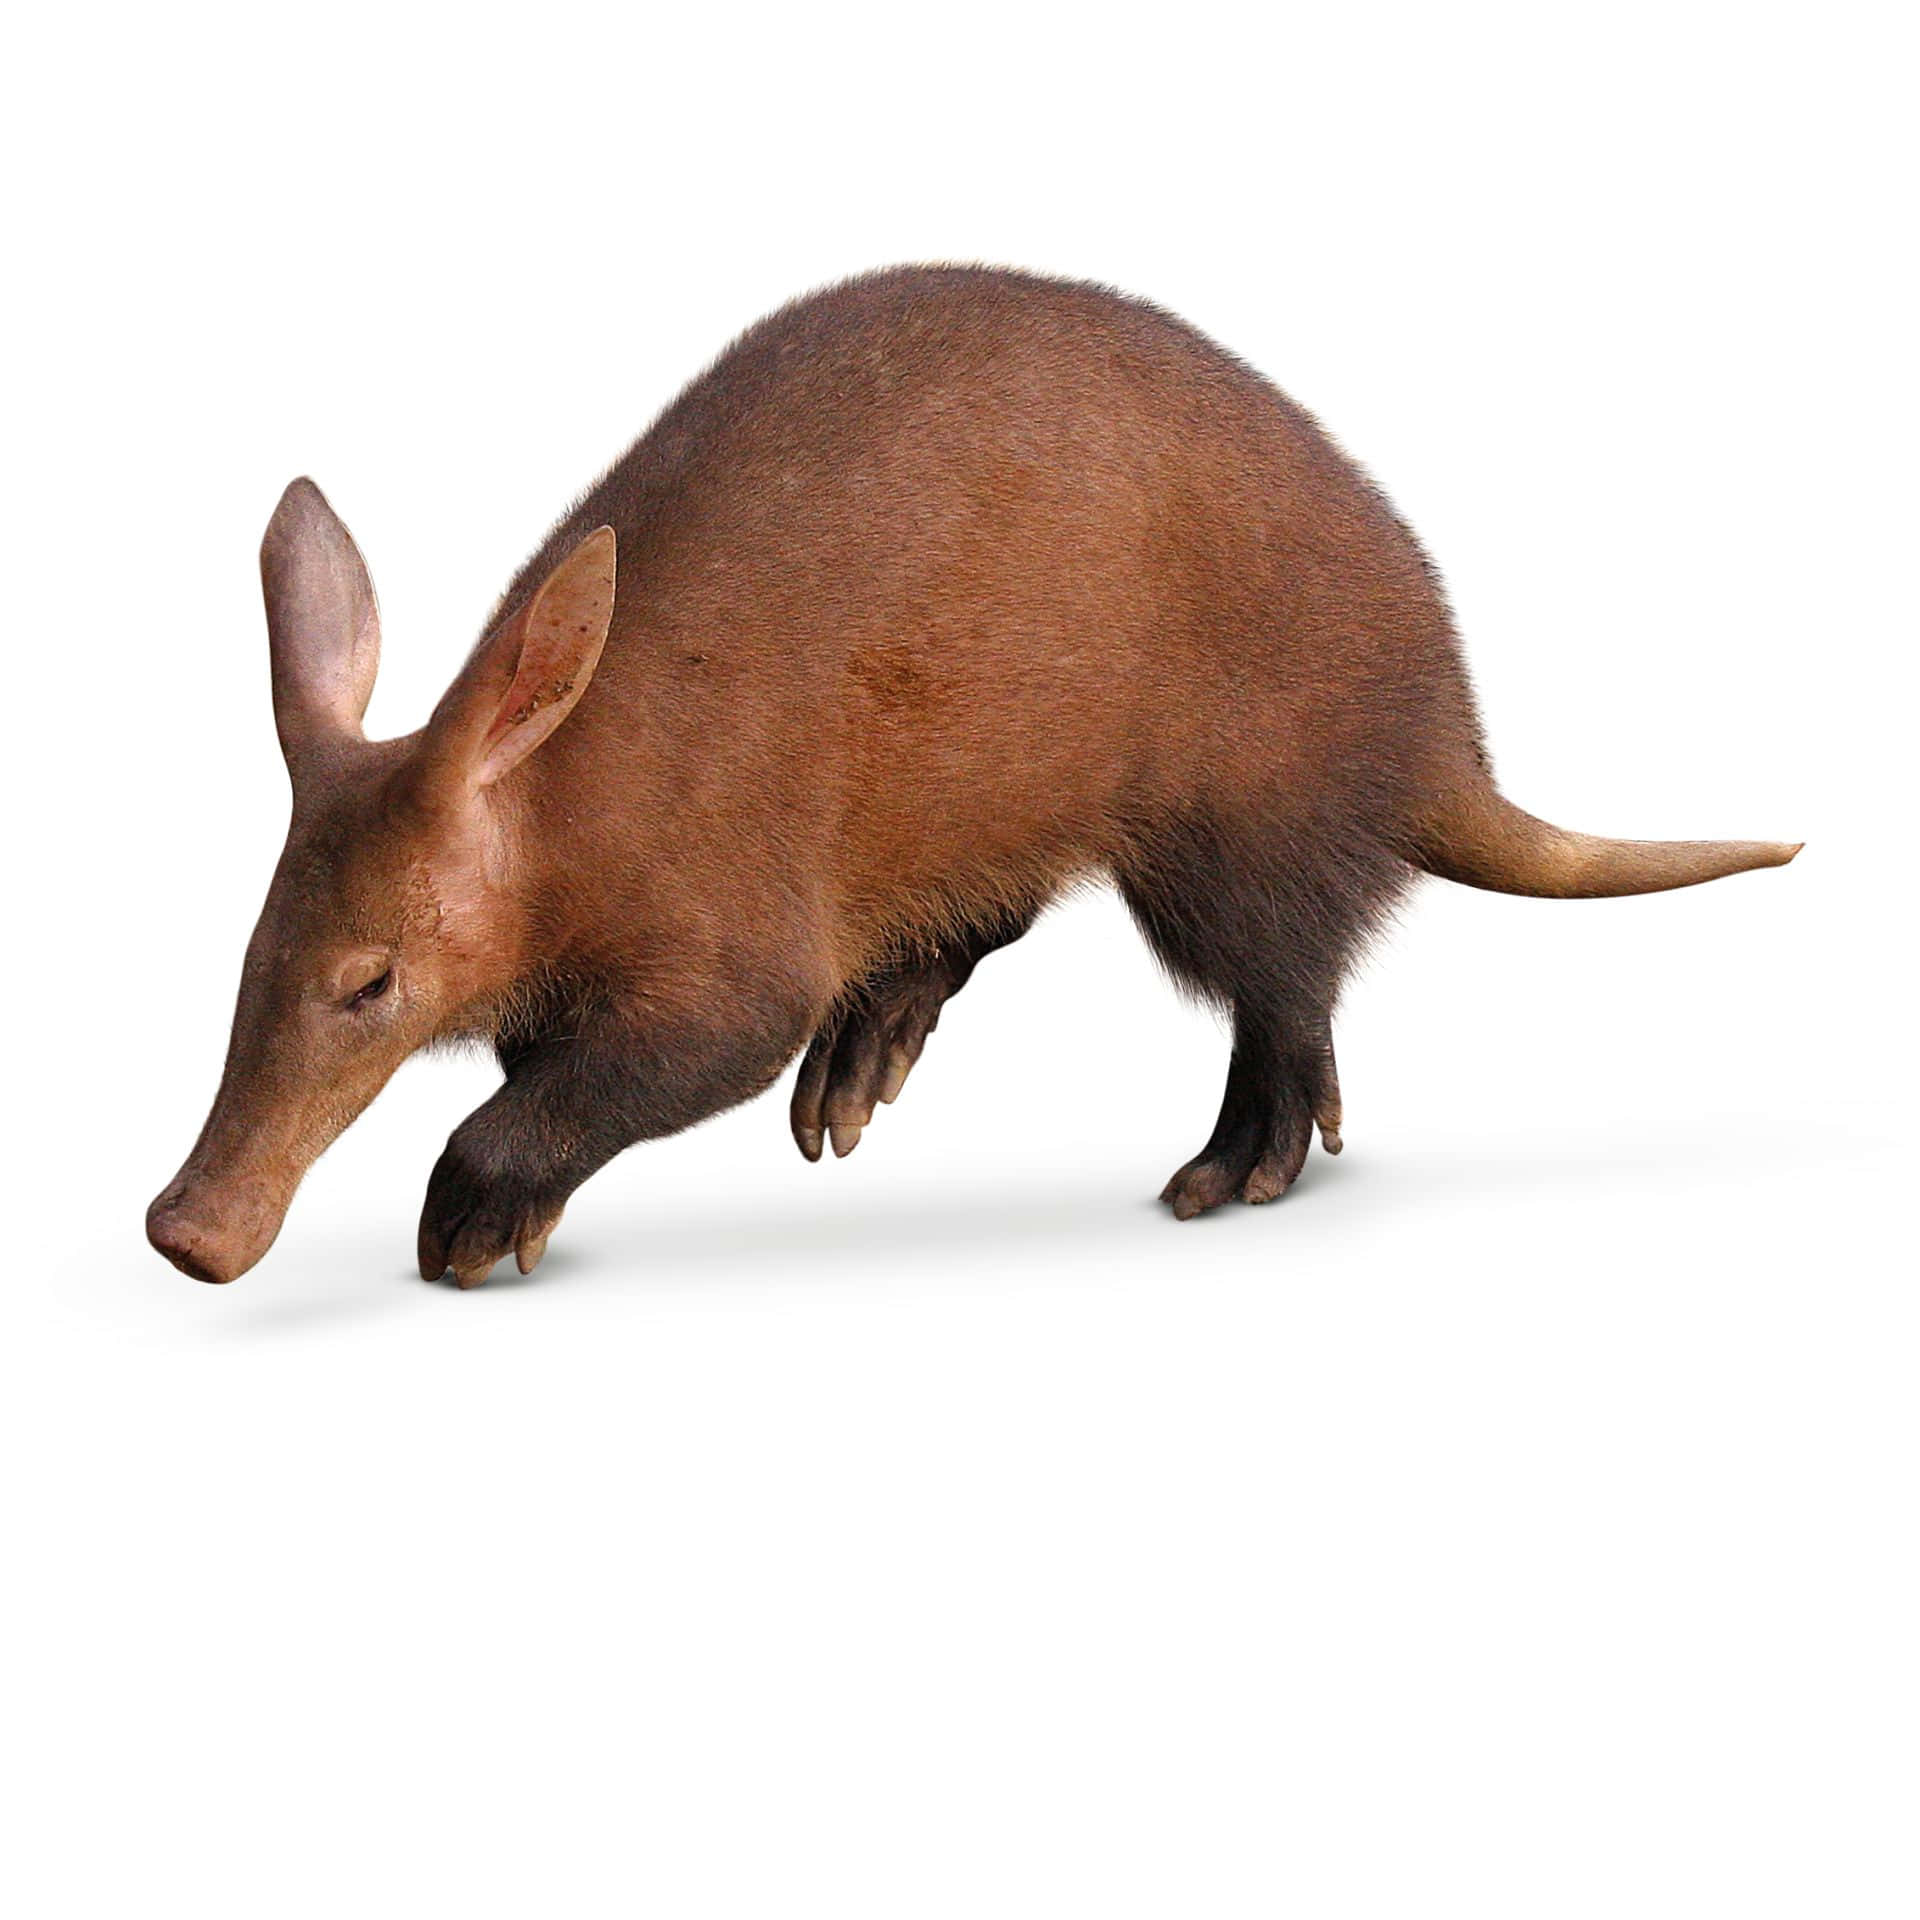 Aardvark Isolatedon White Background Wallpaper